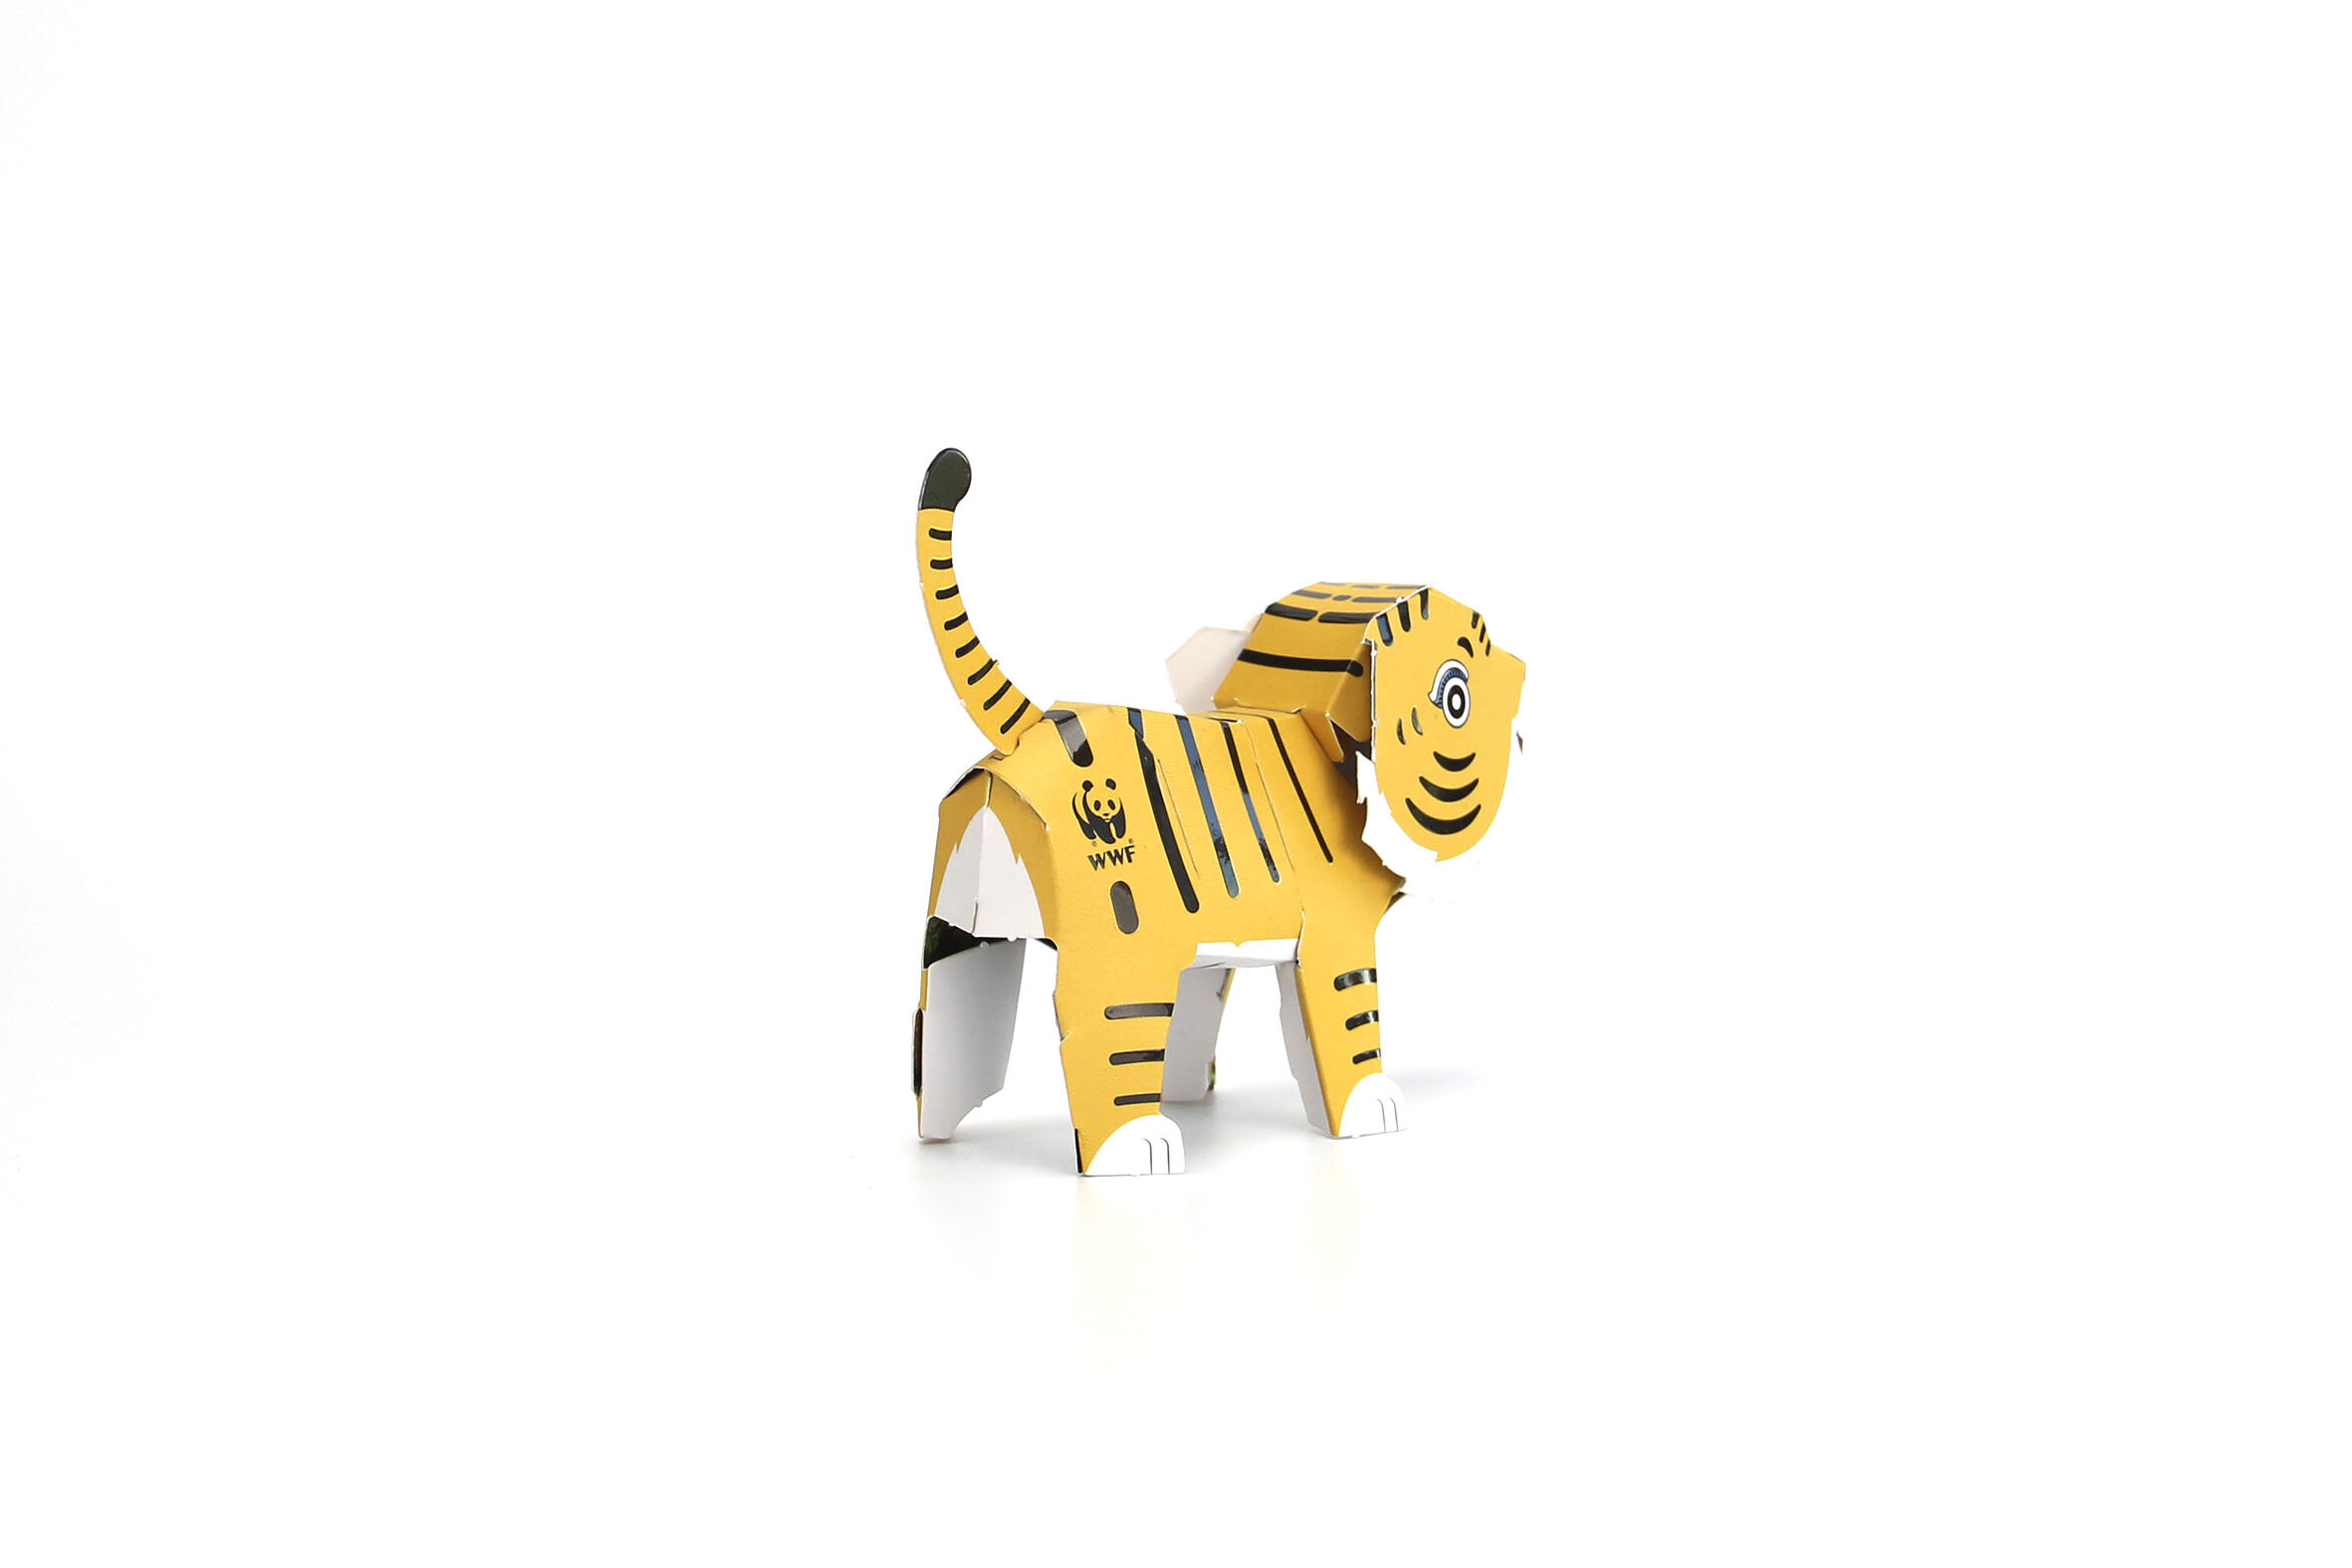 WWF Tiger — Postcardcube